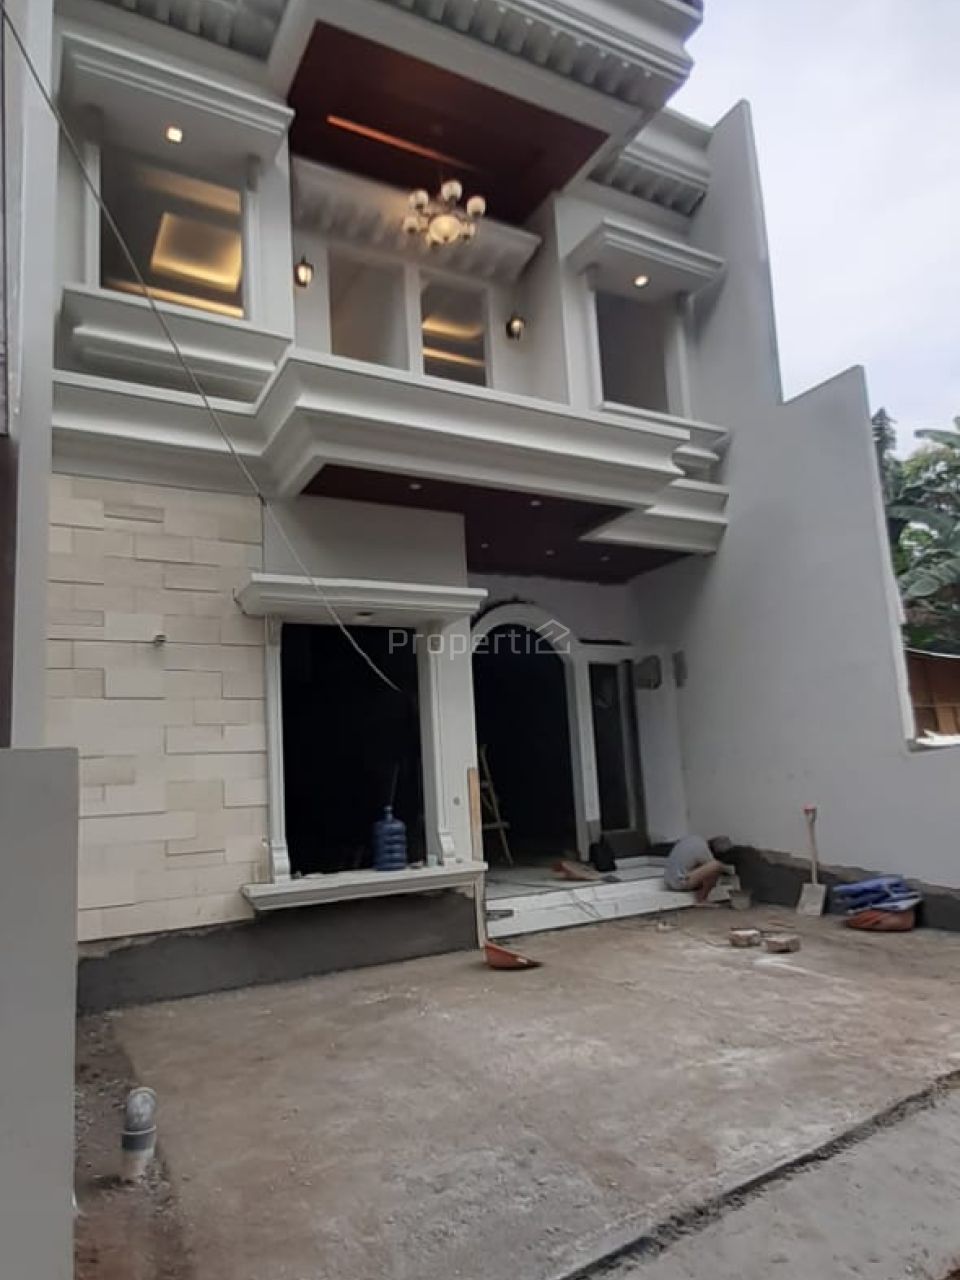 New House in Lebak Bulus, South Jakarta, DKI Jakarta